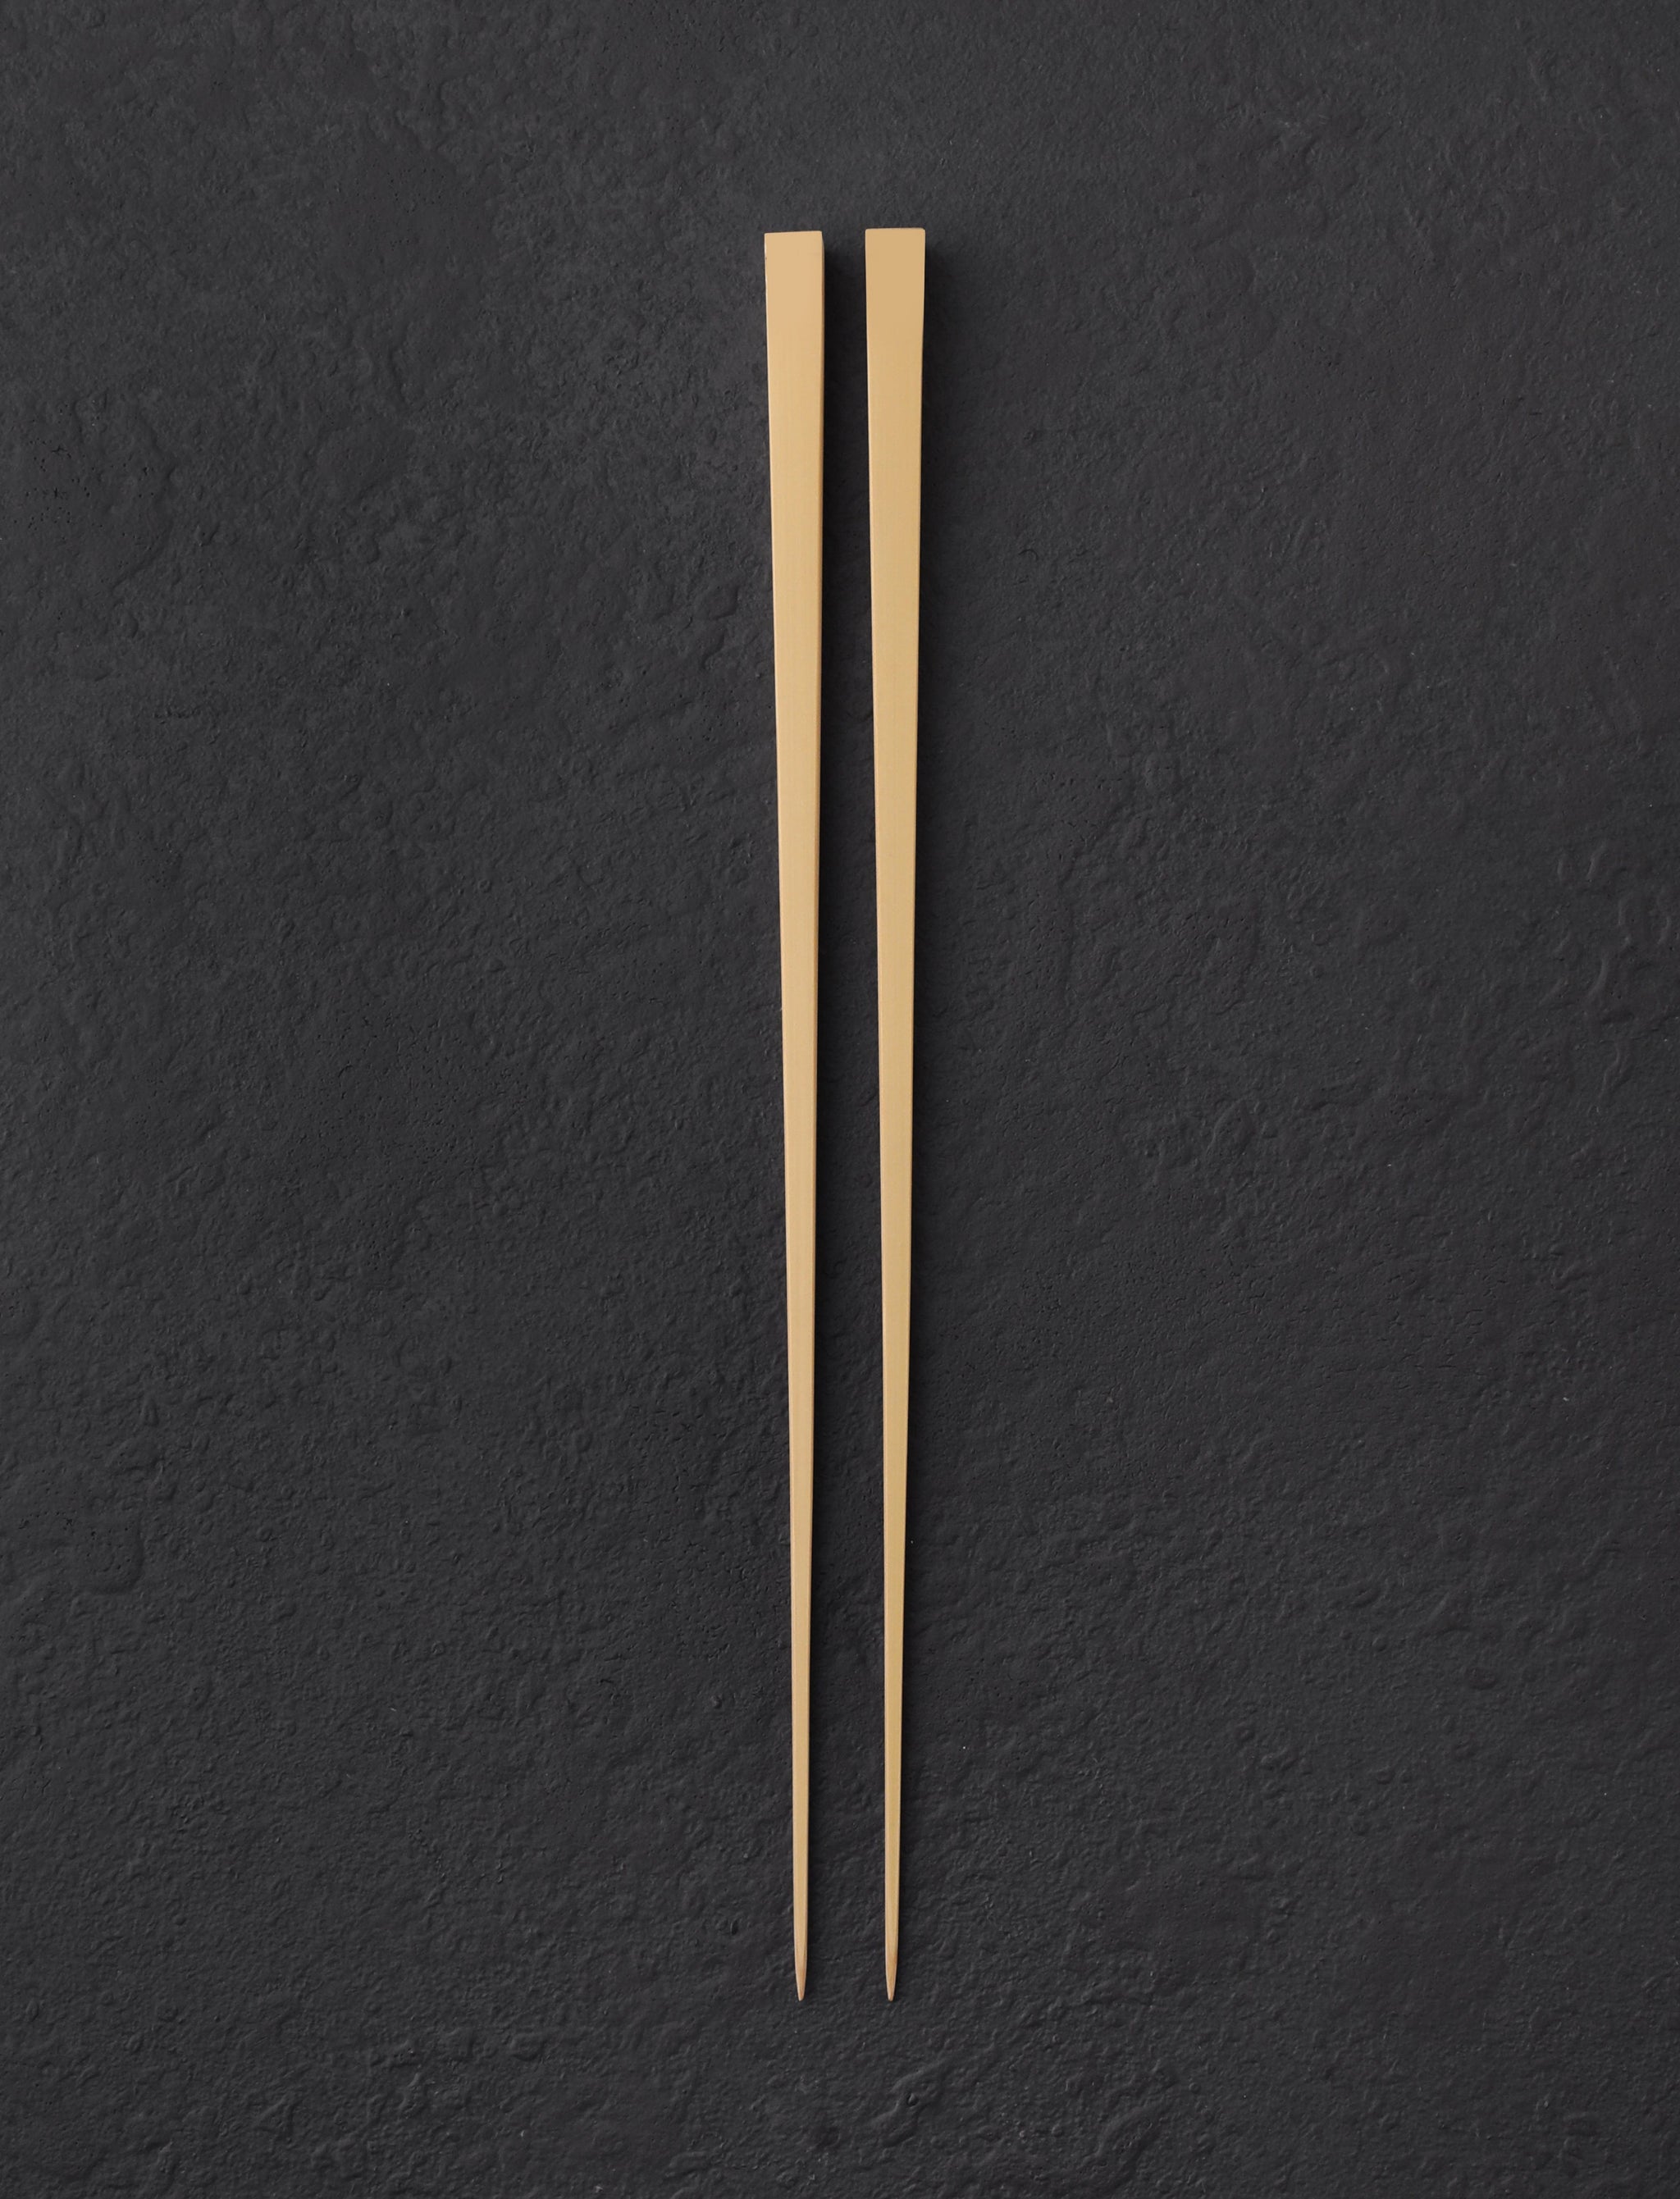 chopsticks background